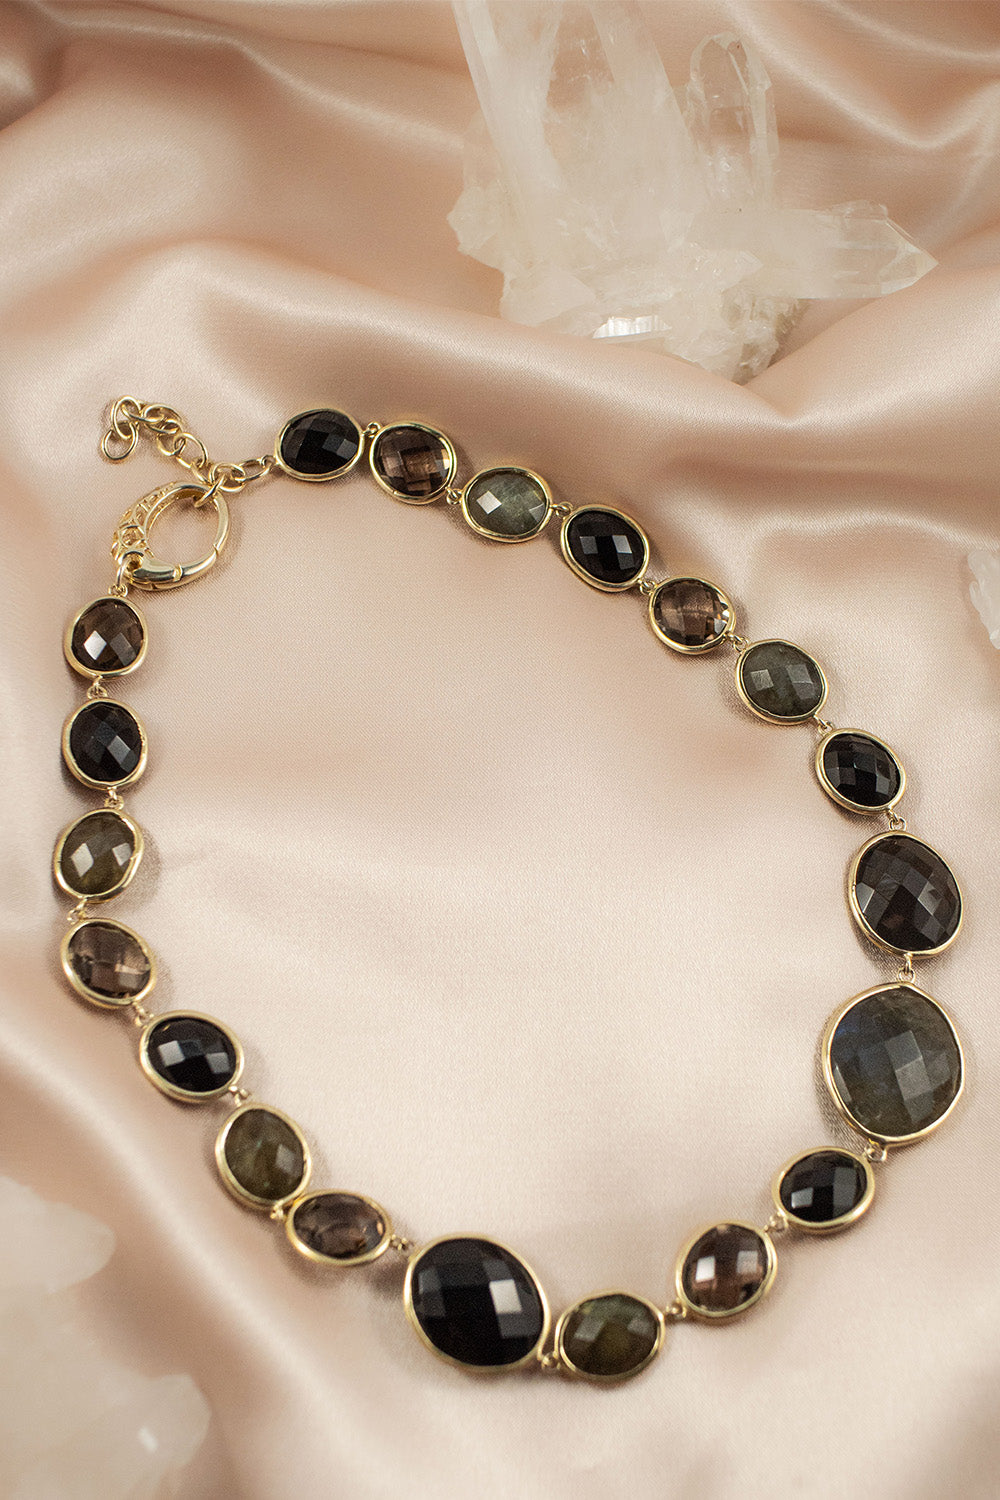 Sivalya Black Onyx Labradorite Necklace and Earrings Set - Paris